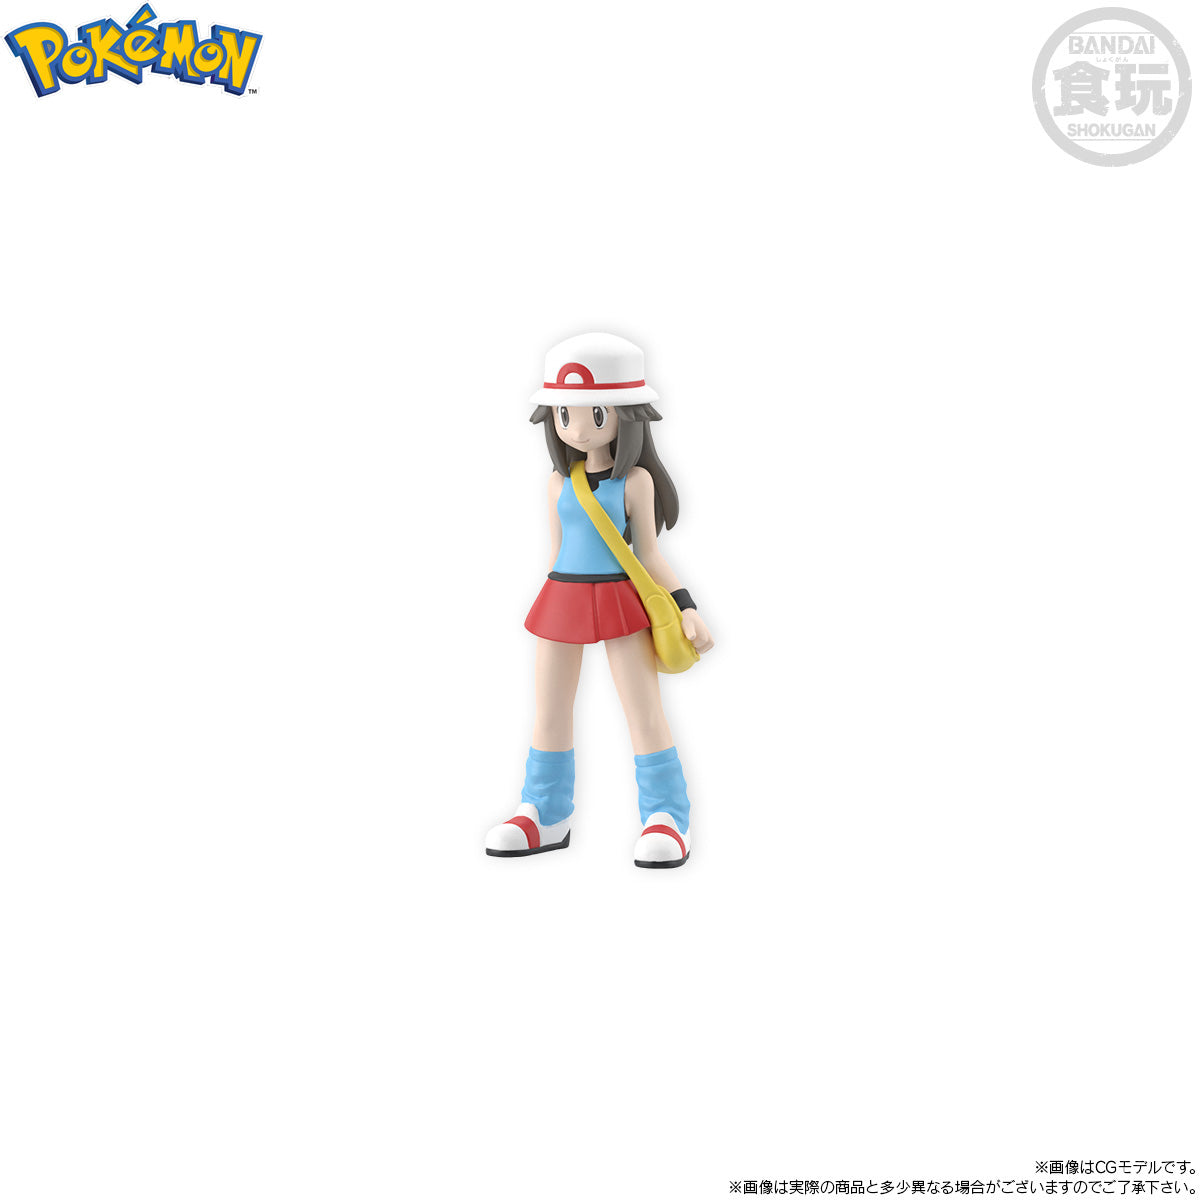 Bandai - Shokugan - Pokemon Scale World Kanto Region - Leaf, Pixi &amp; Gengar - Marvelous Toys